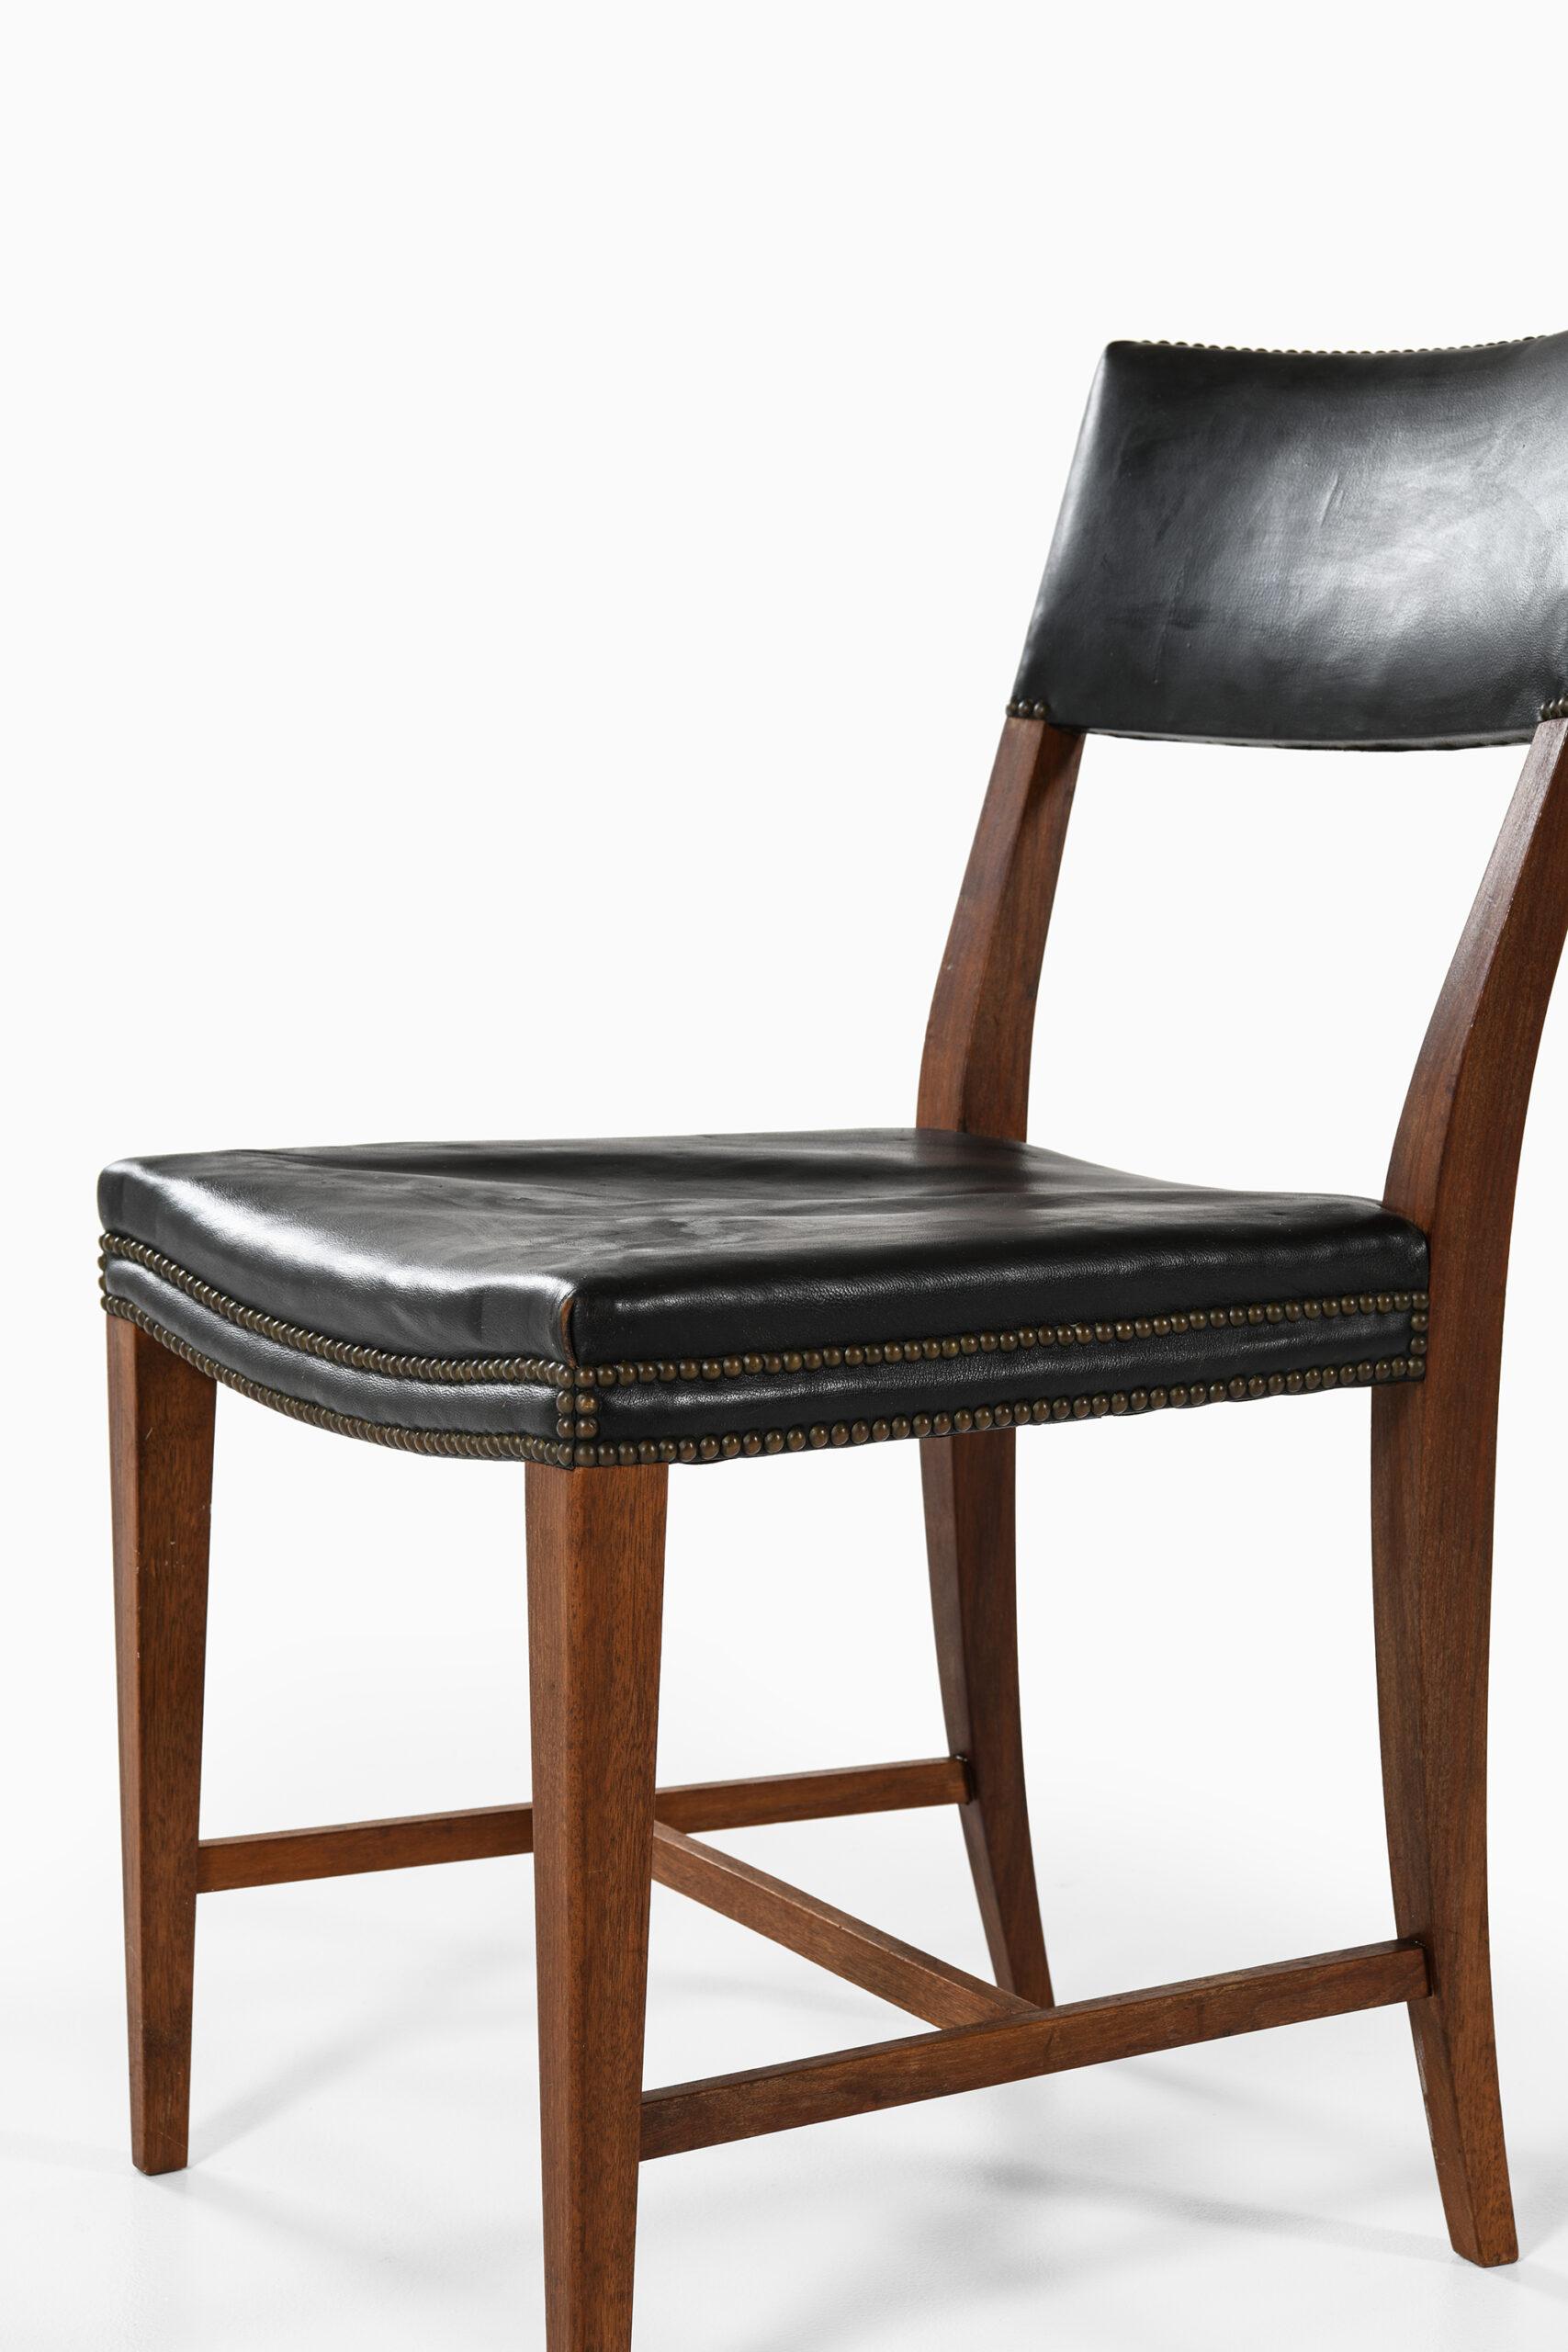 Swedish Josef Frank Dining Chairs Model 695 Produced by Svenskt Tenn For Sale